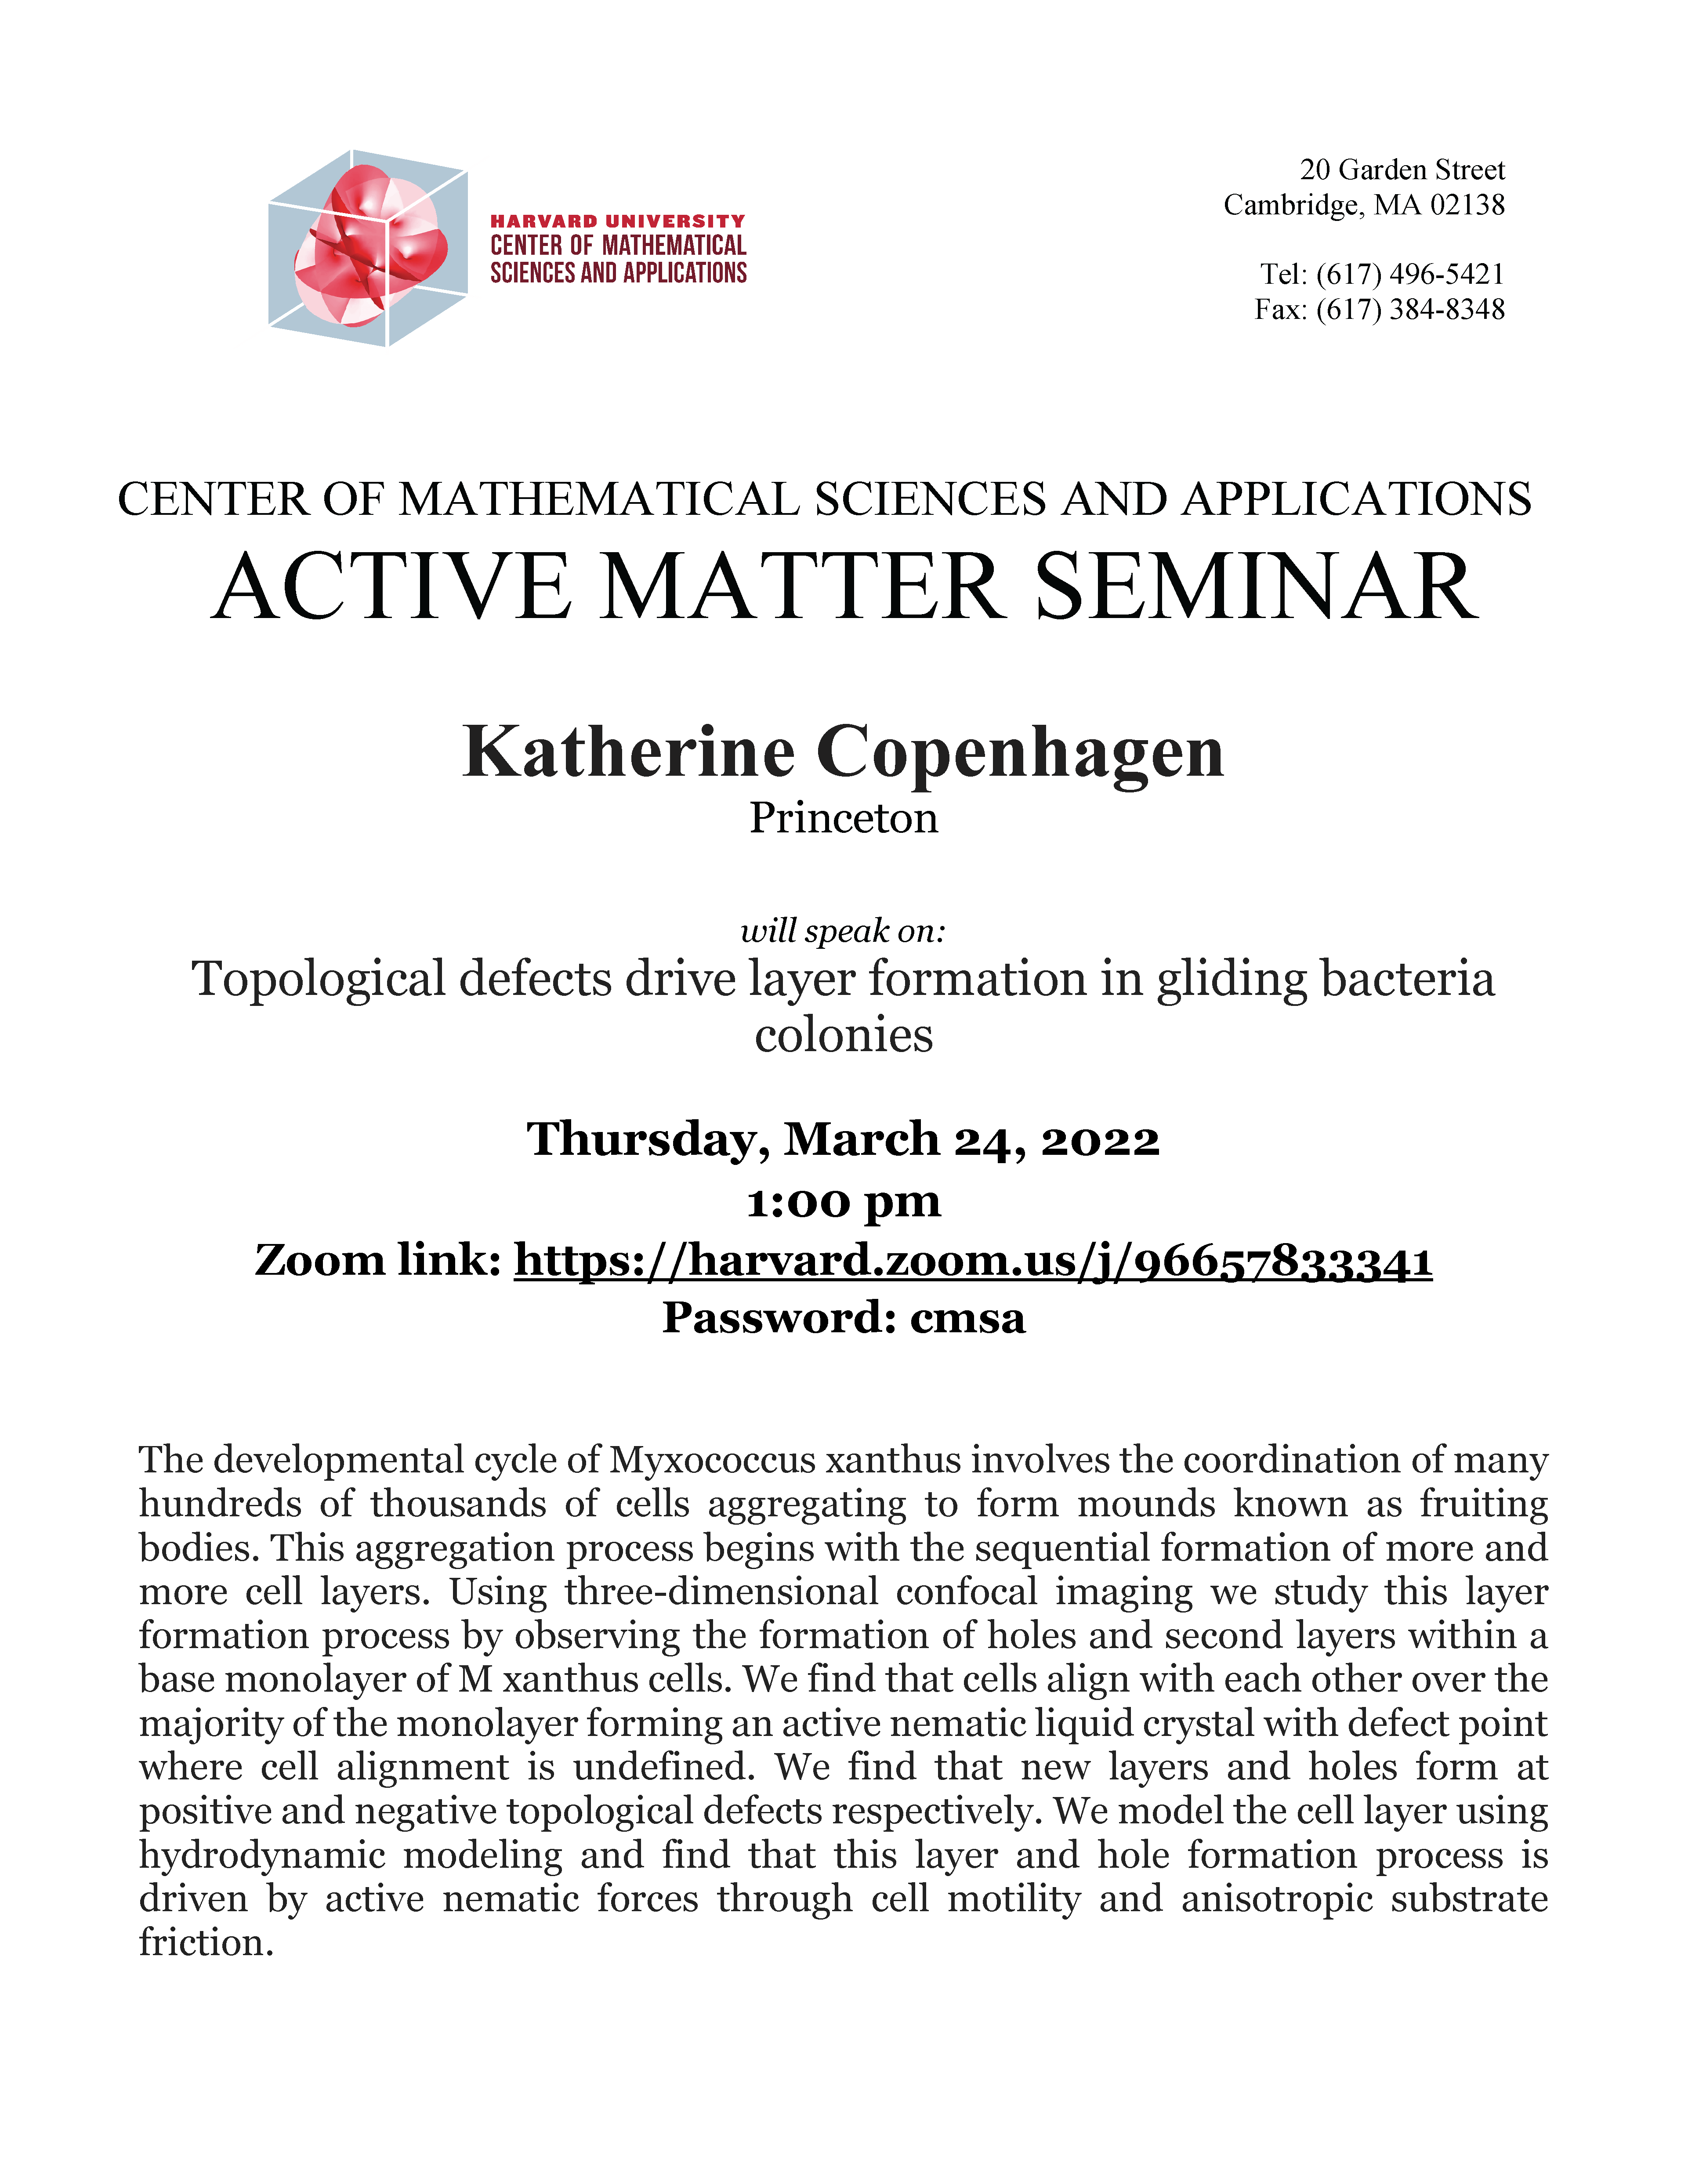 CMSA-Active-Matter-Seminar-03.24.22